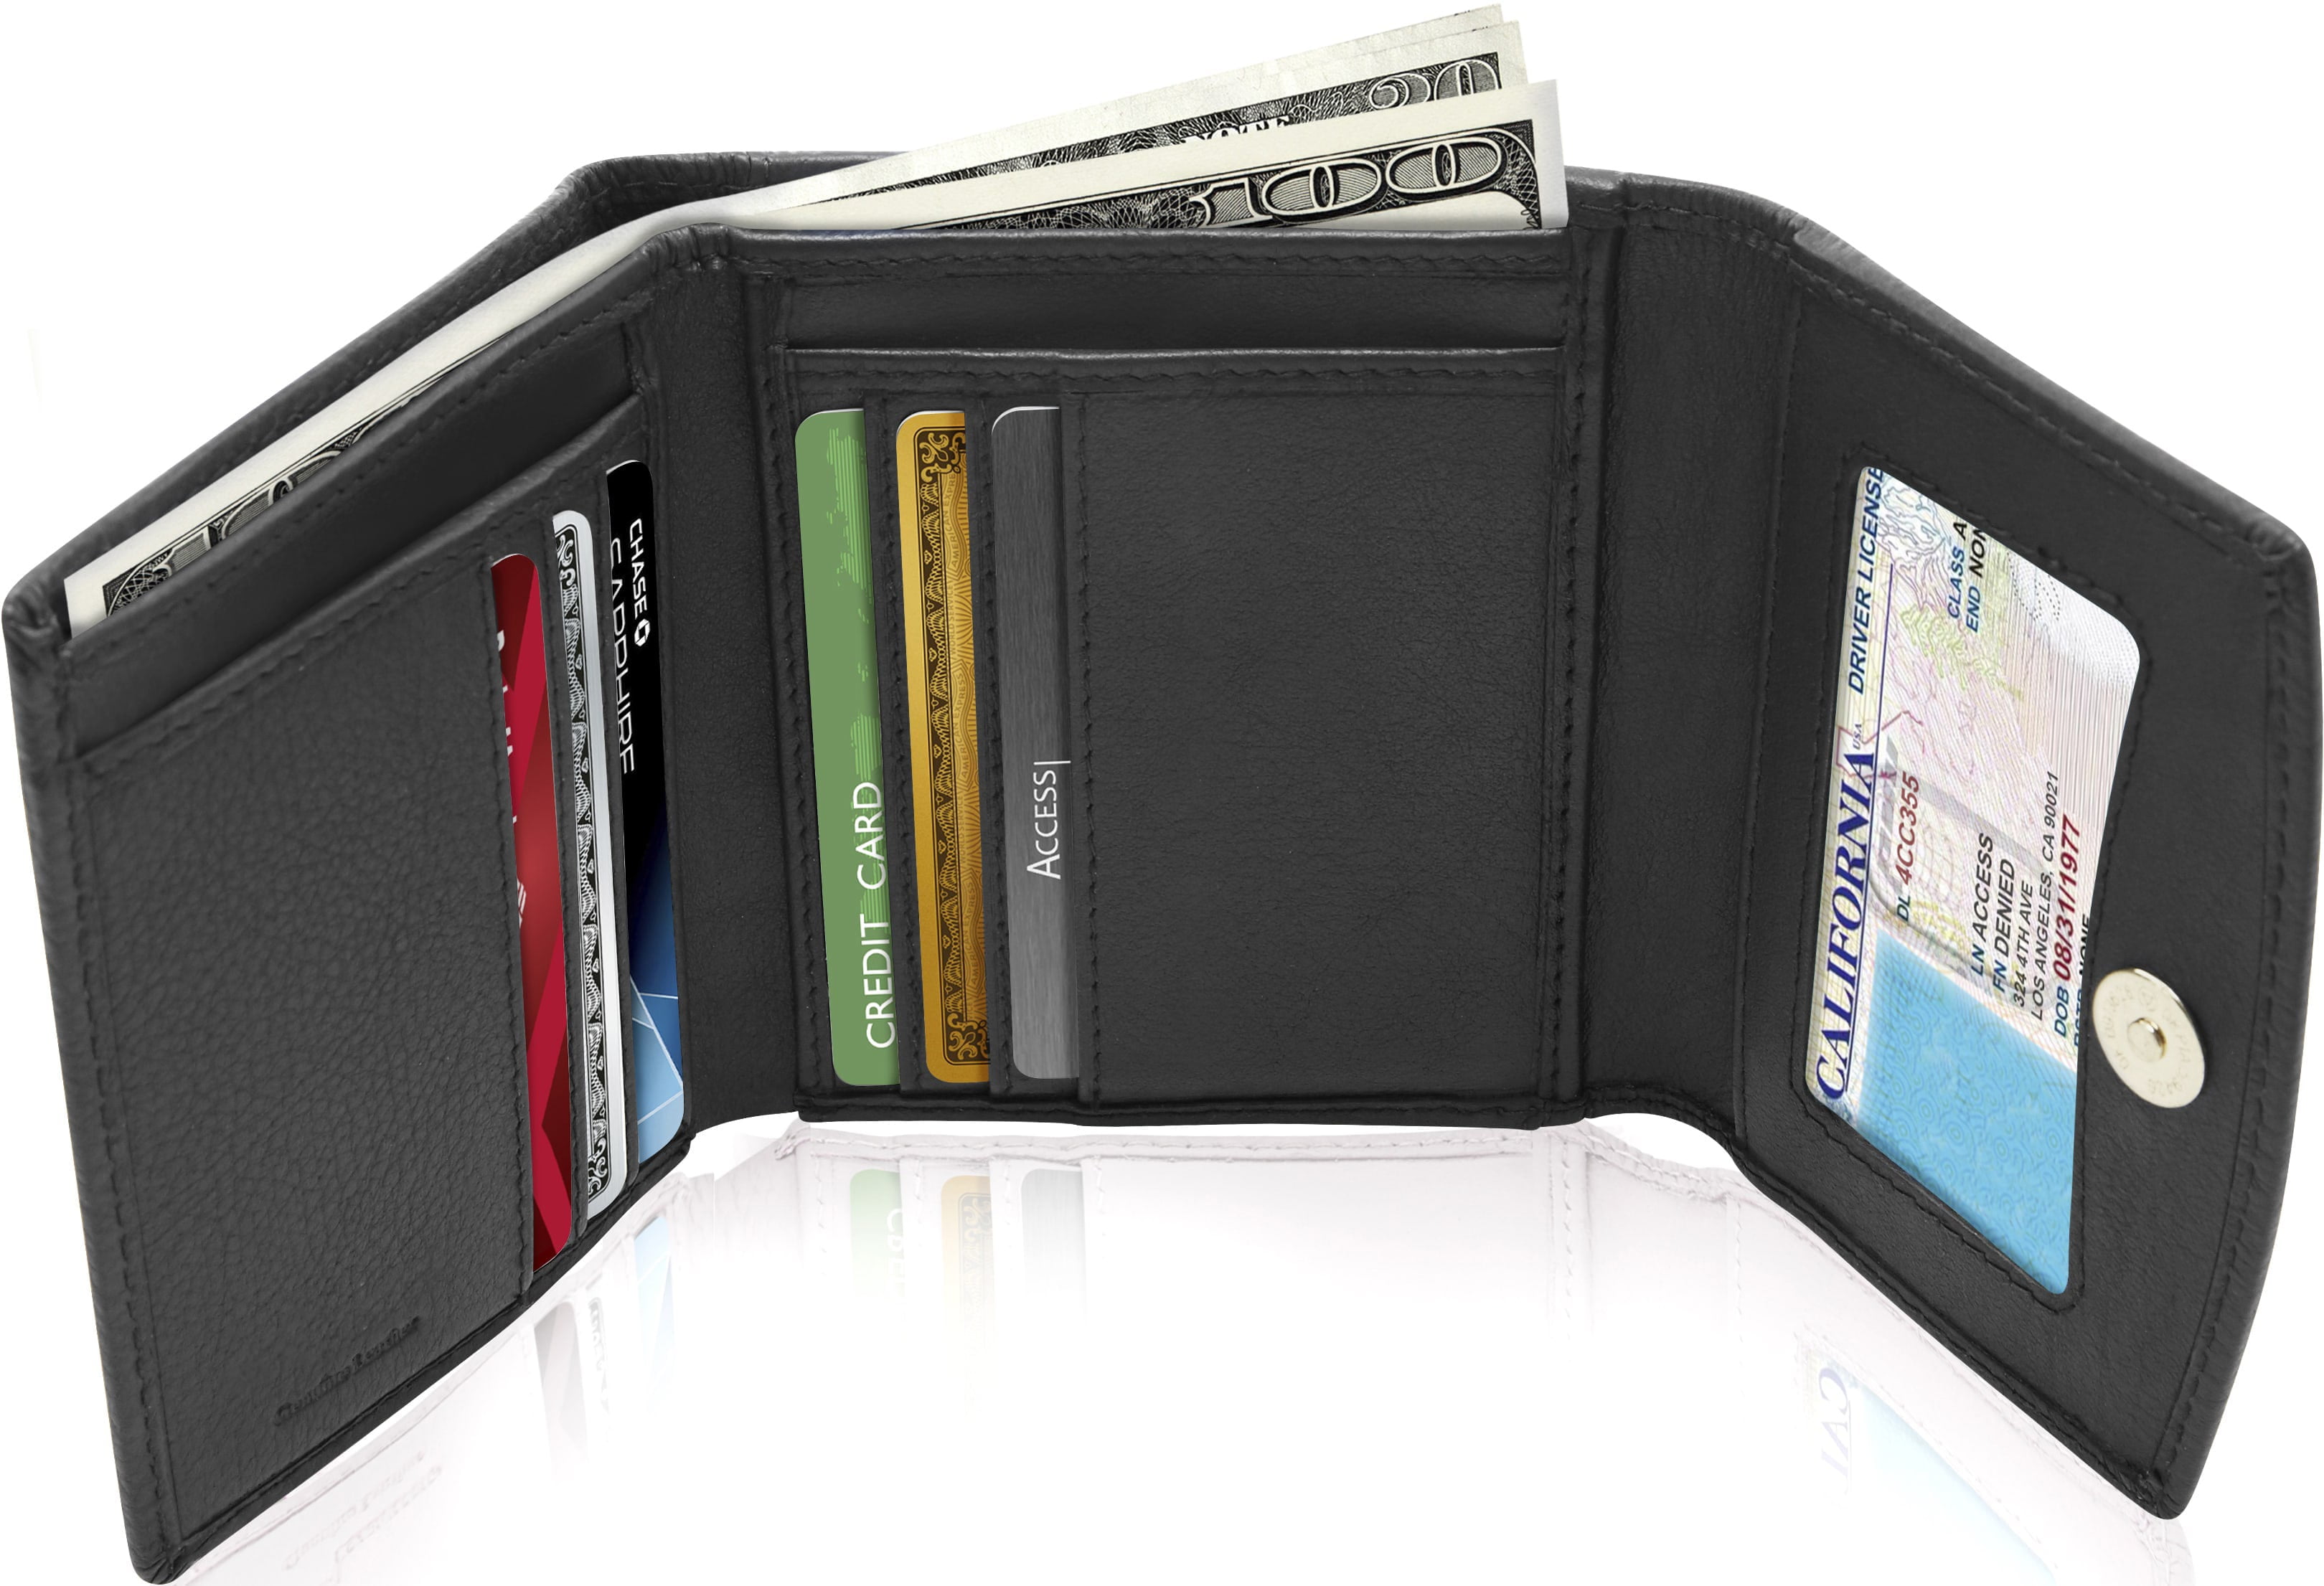 harmtty Fashion Women Solid Color Trifold Short Wallet Cash Card Holder  Coin Purse Bag,Light Gray